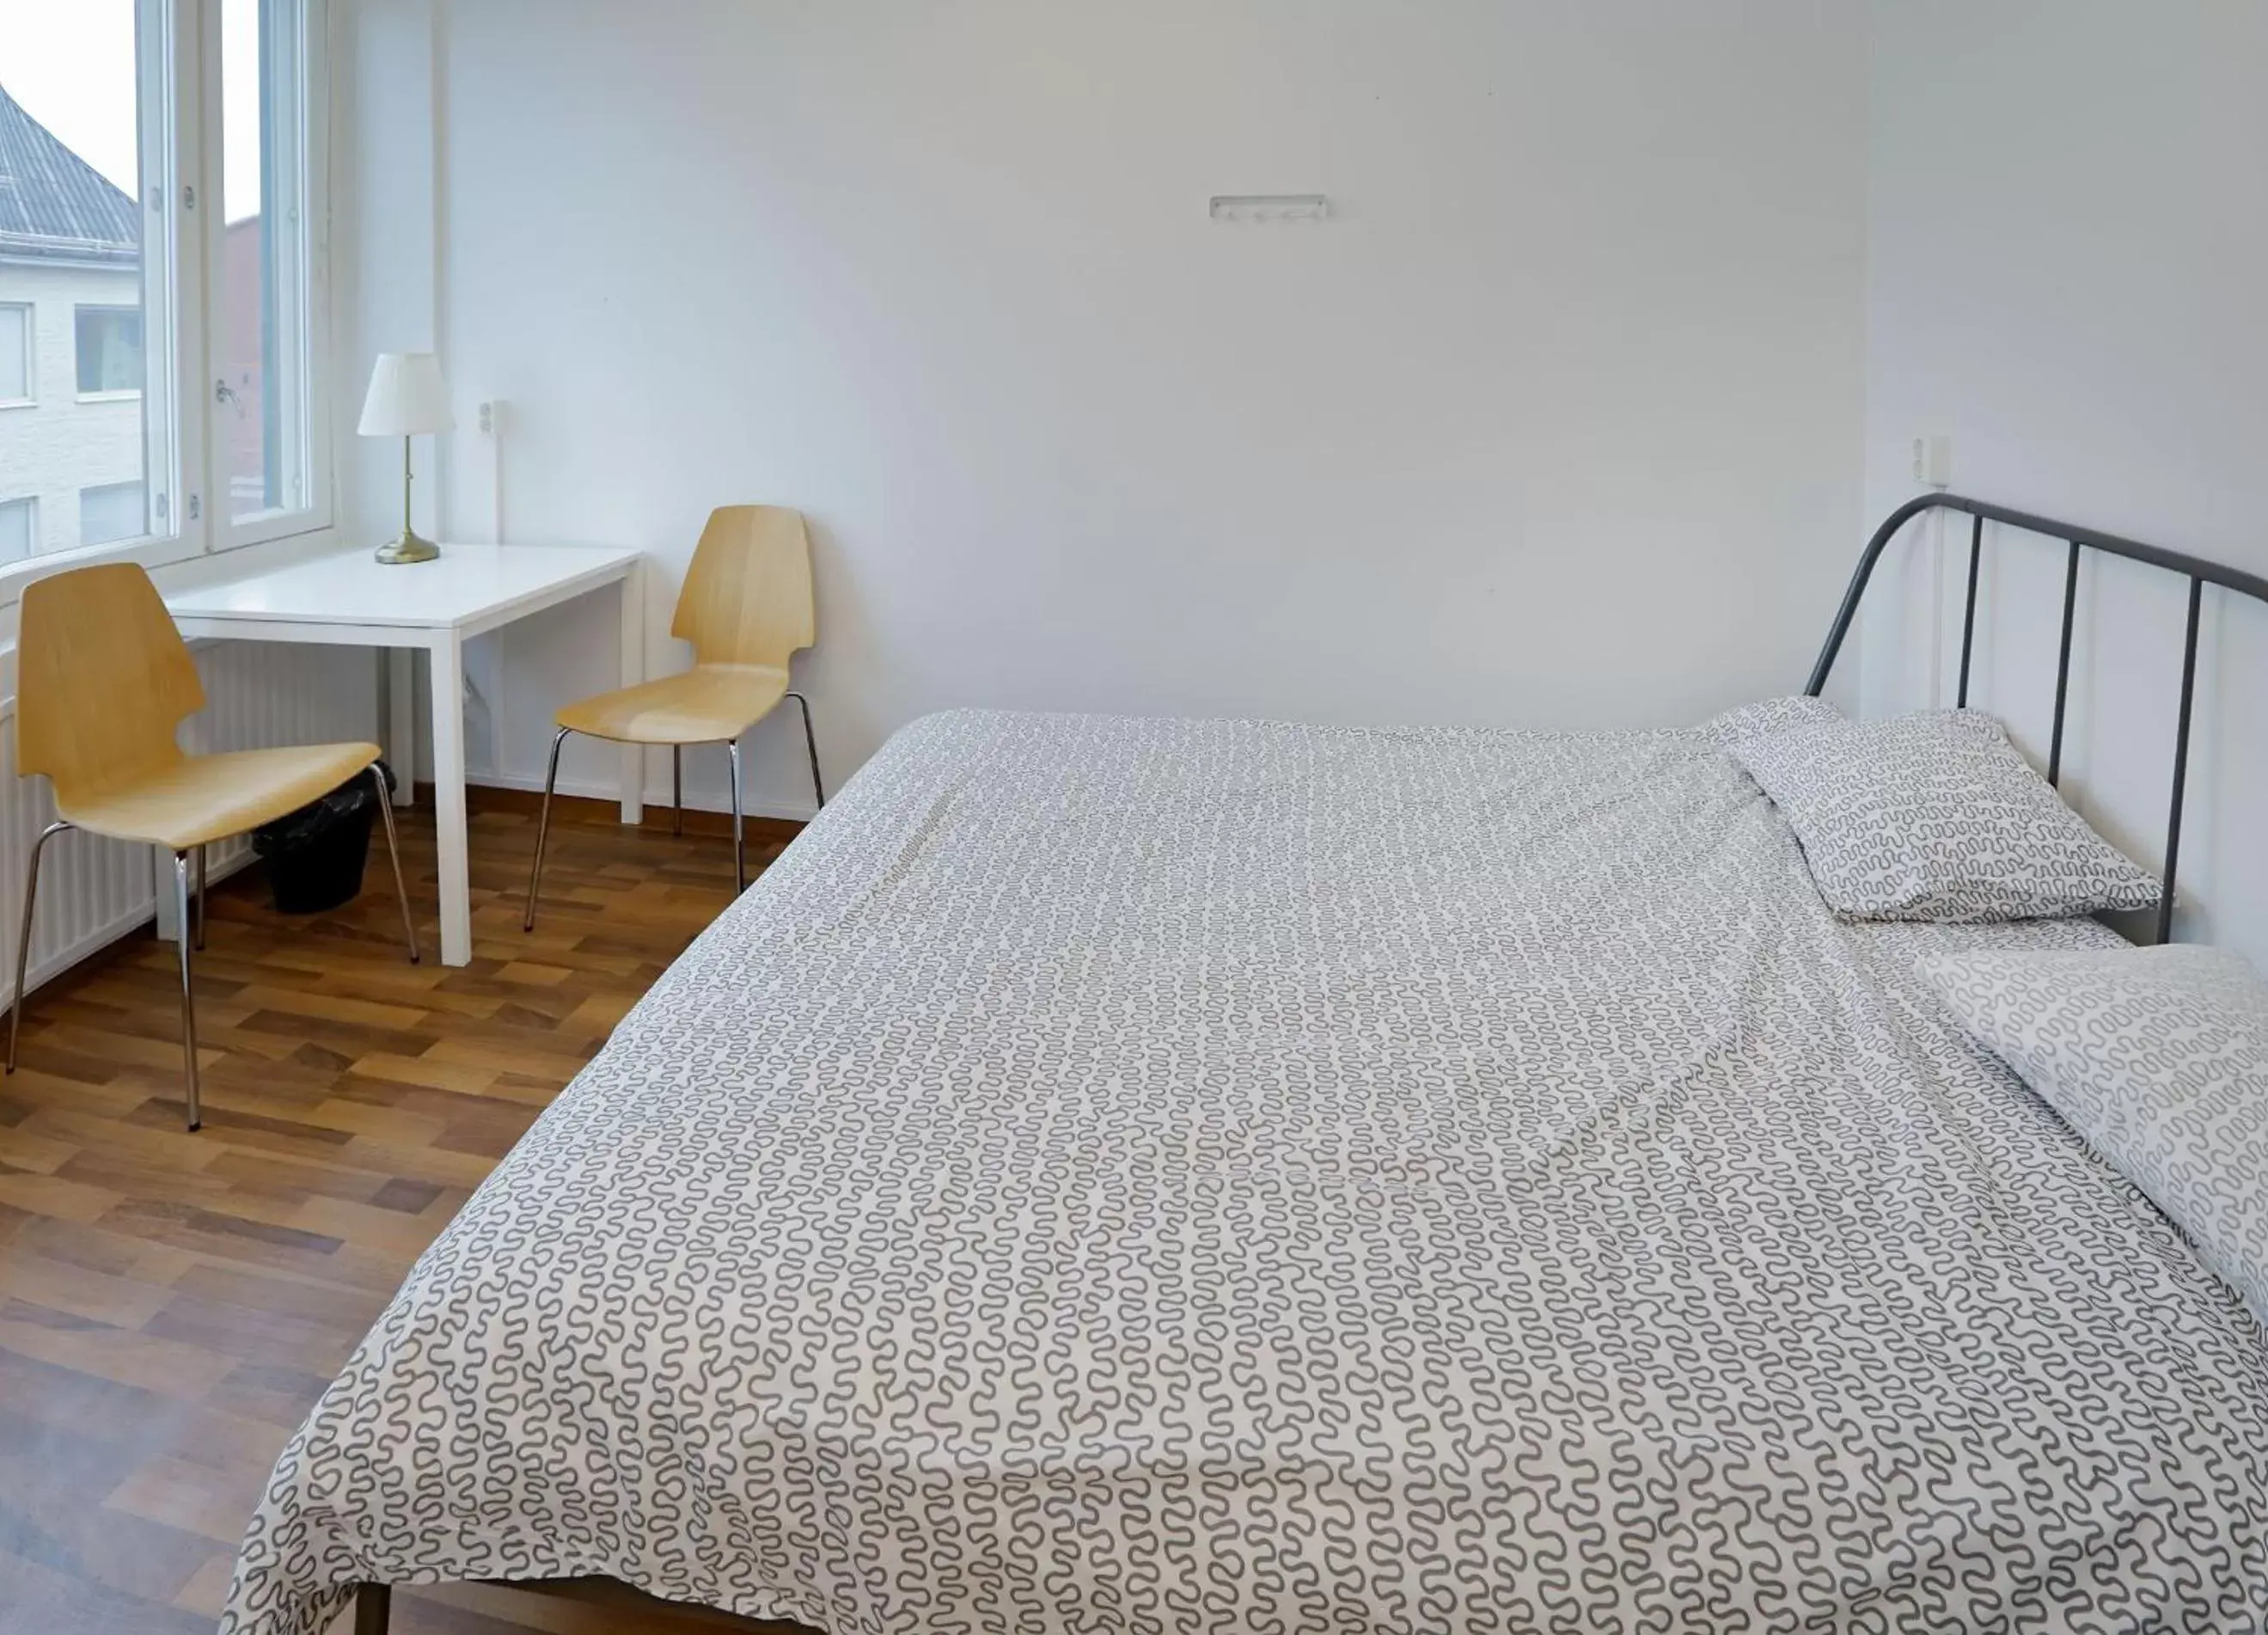 Bed, Room Photo in CheapSleep Hostel Helsinki